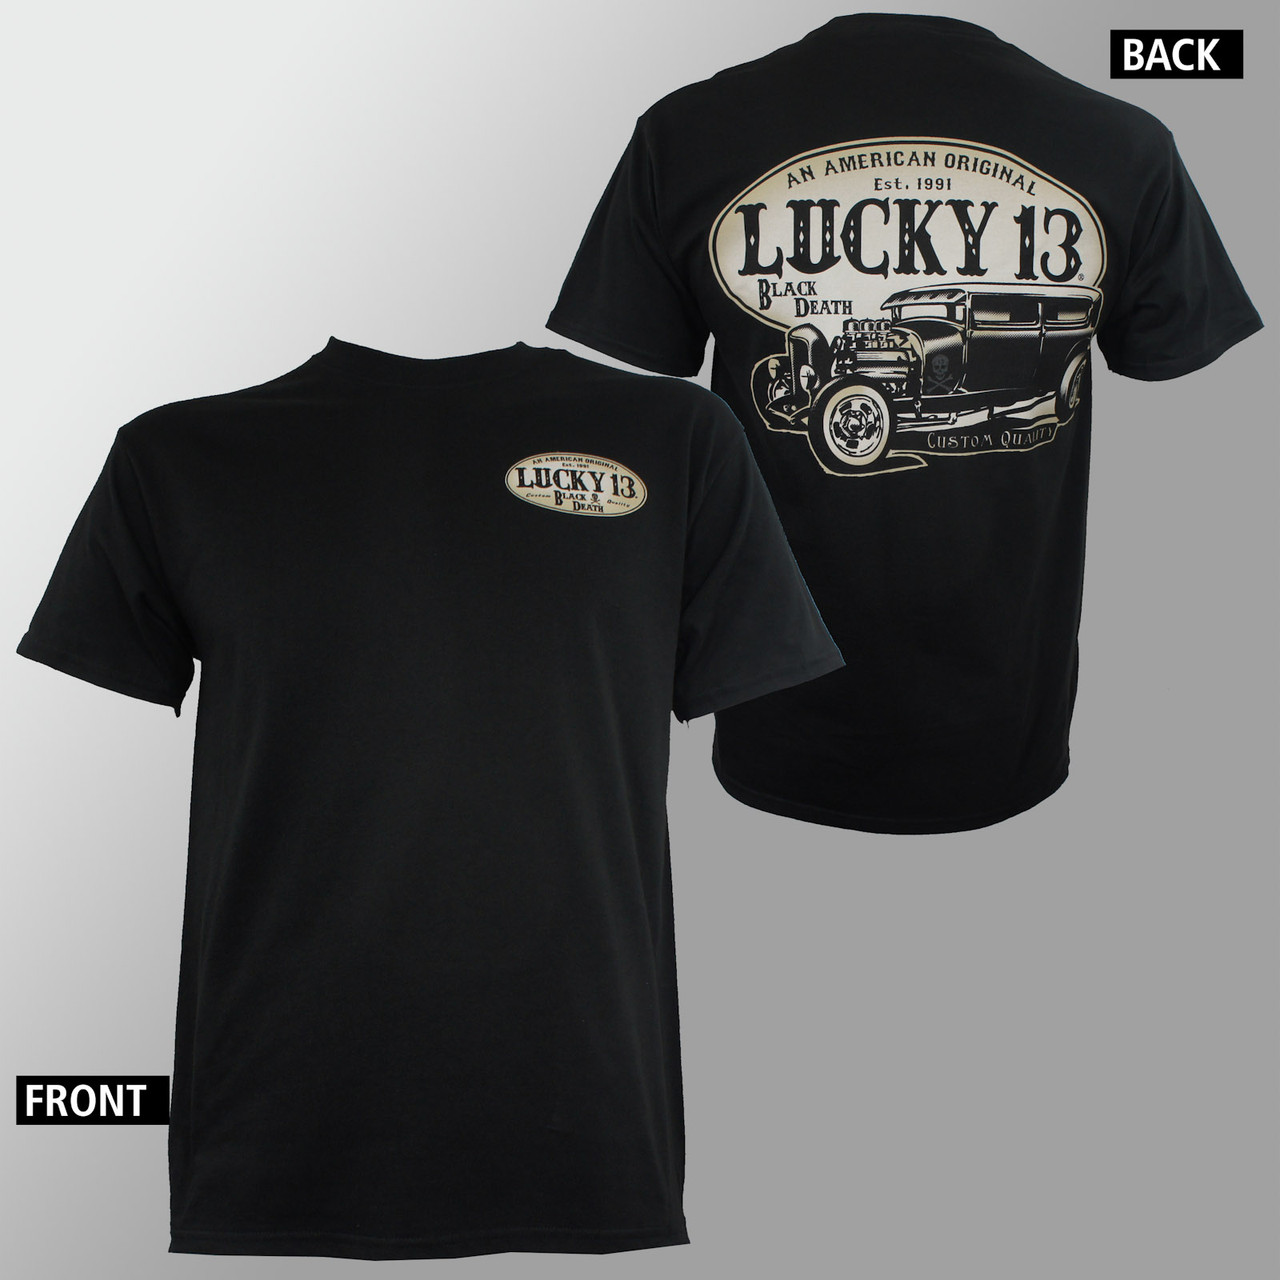 LUCKY 13 American Original T-Shirt - Merch2rock Alternative Clothing